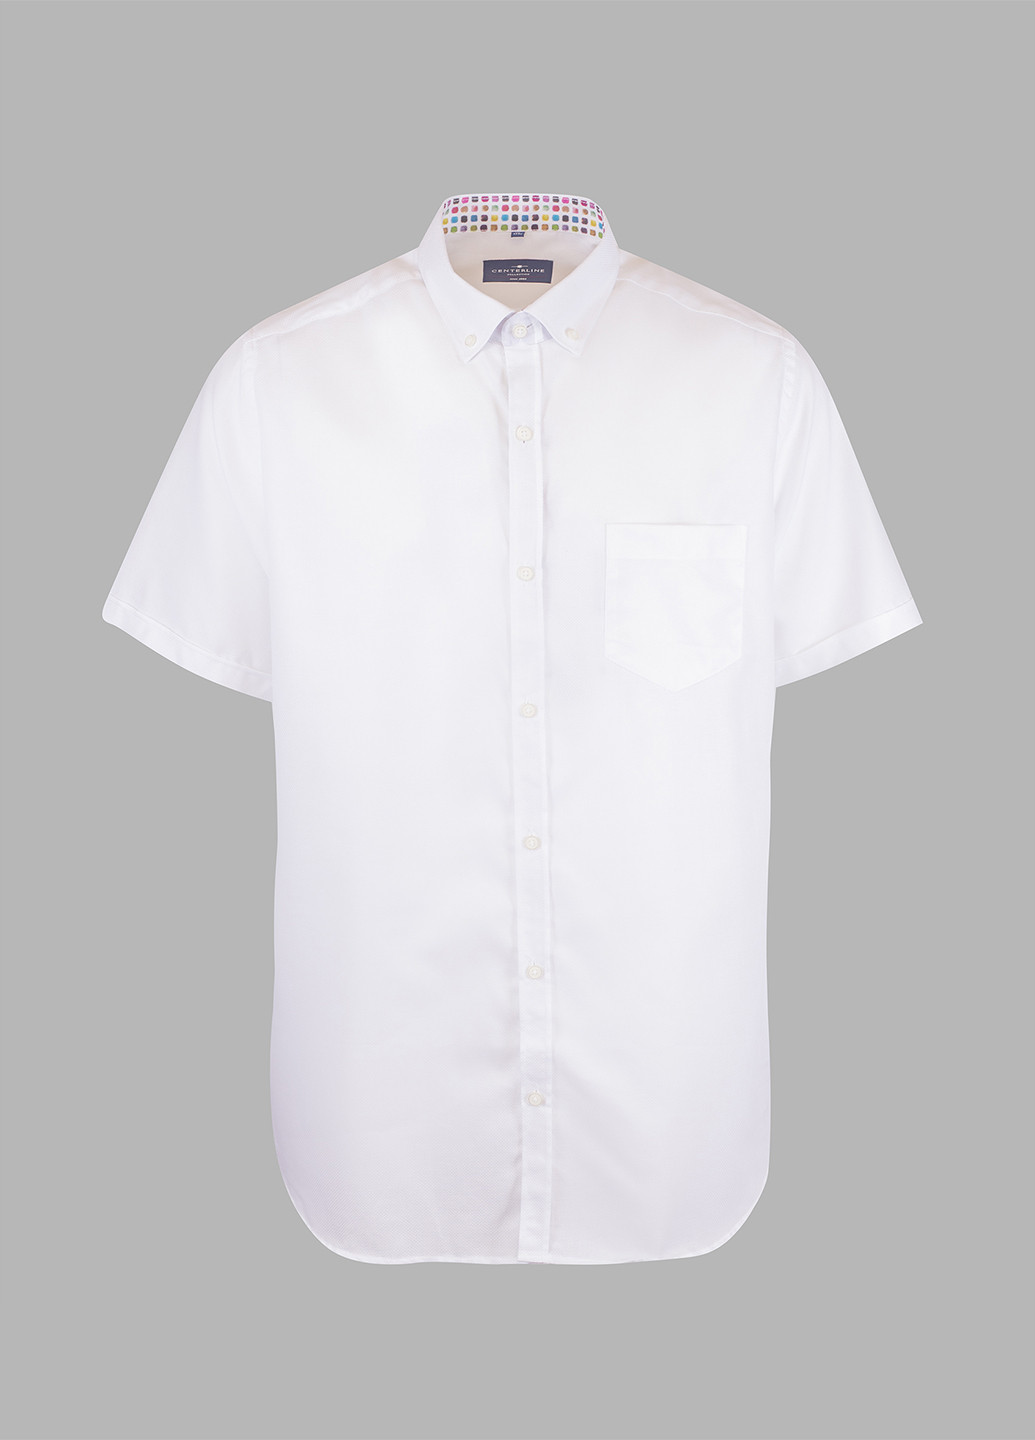 Белая кэжуал рубашка однотонная Centerline